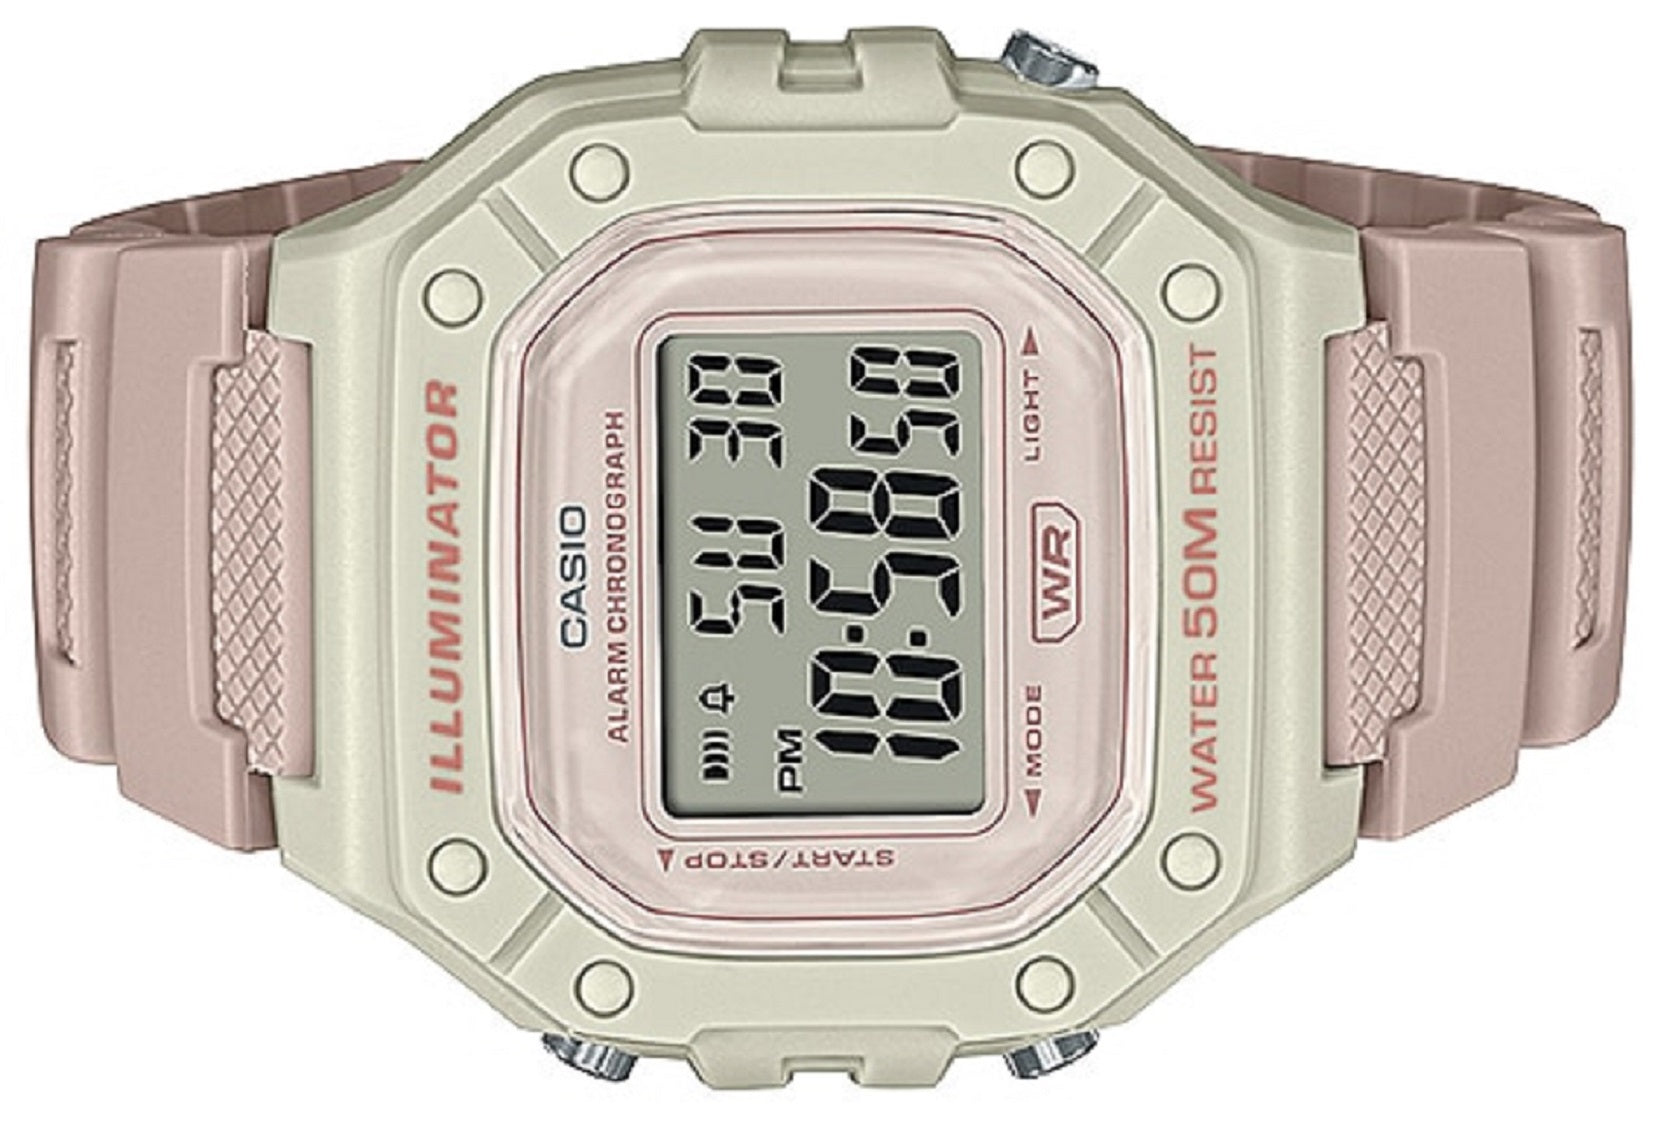 Casio W-218HC-4A2 Pink Resin Watch-Watch Portal Philippines